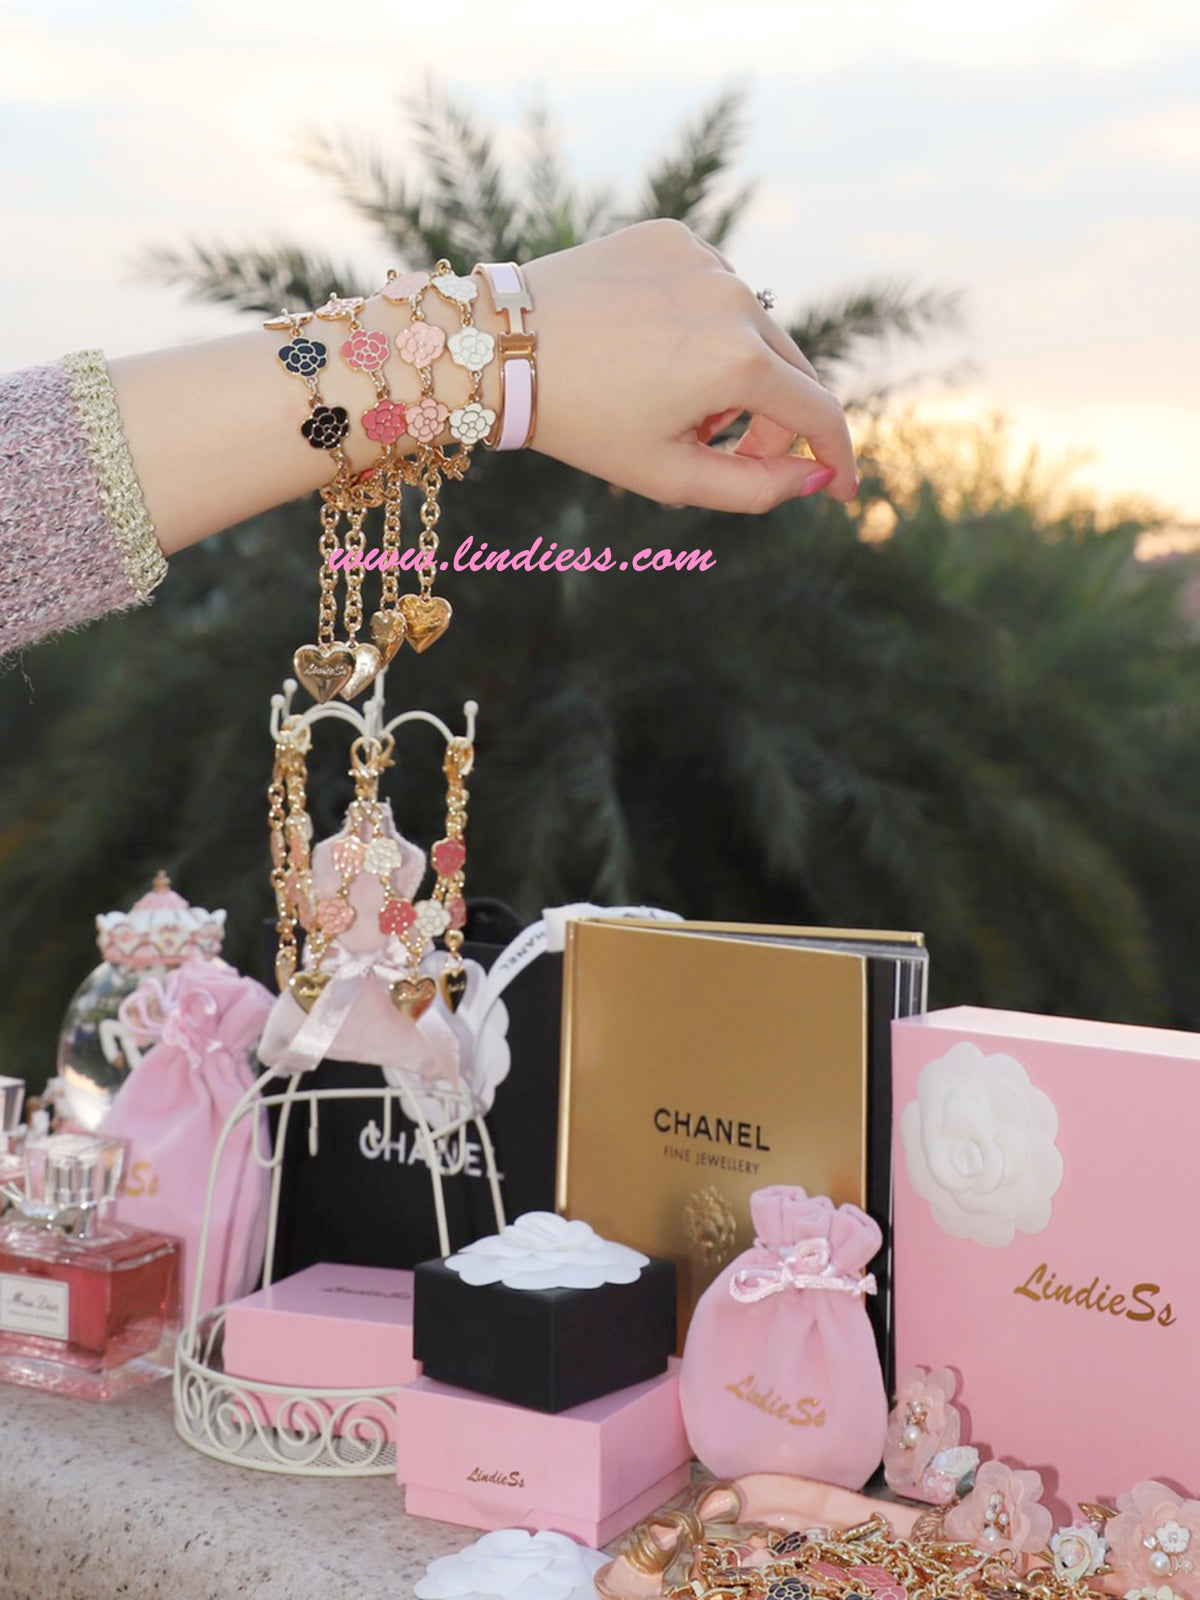 Pink Chanel Charm Bracelet